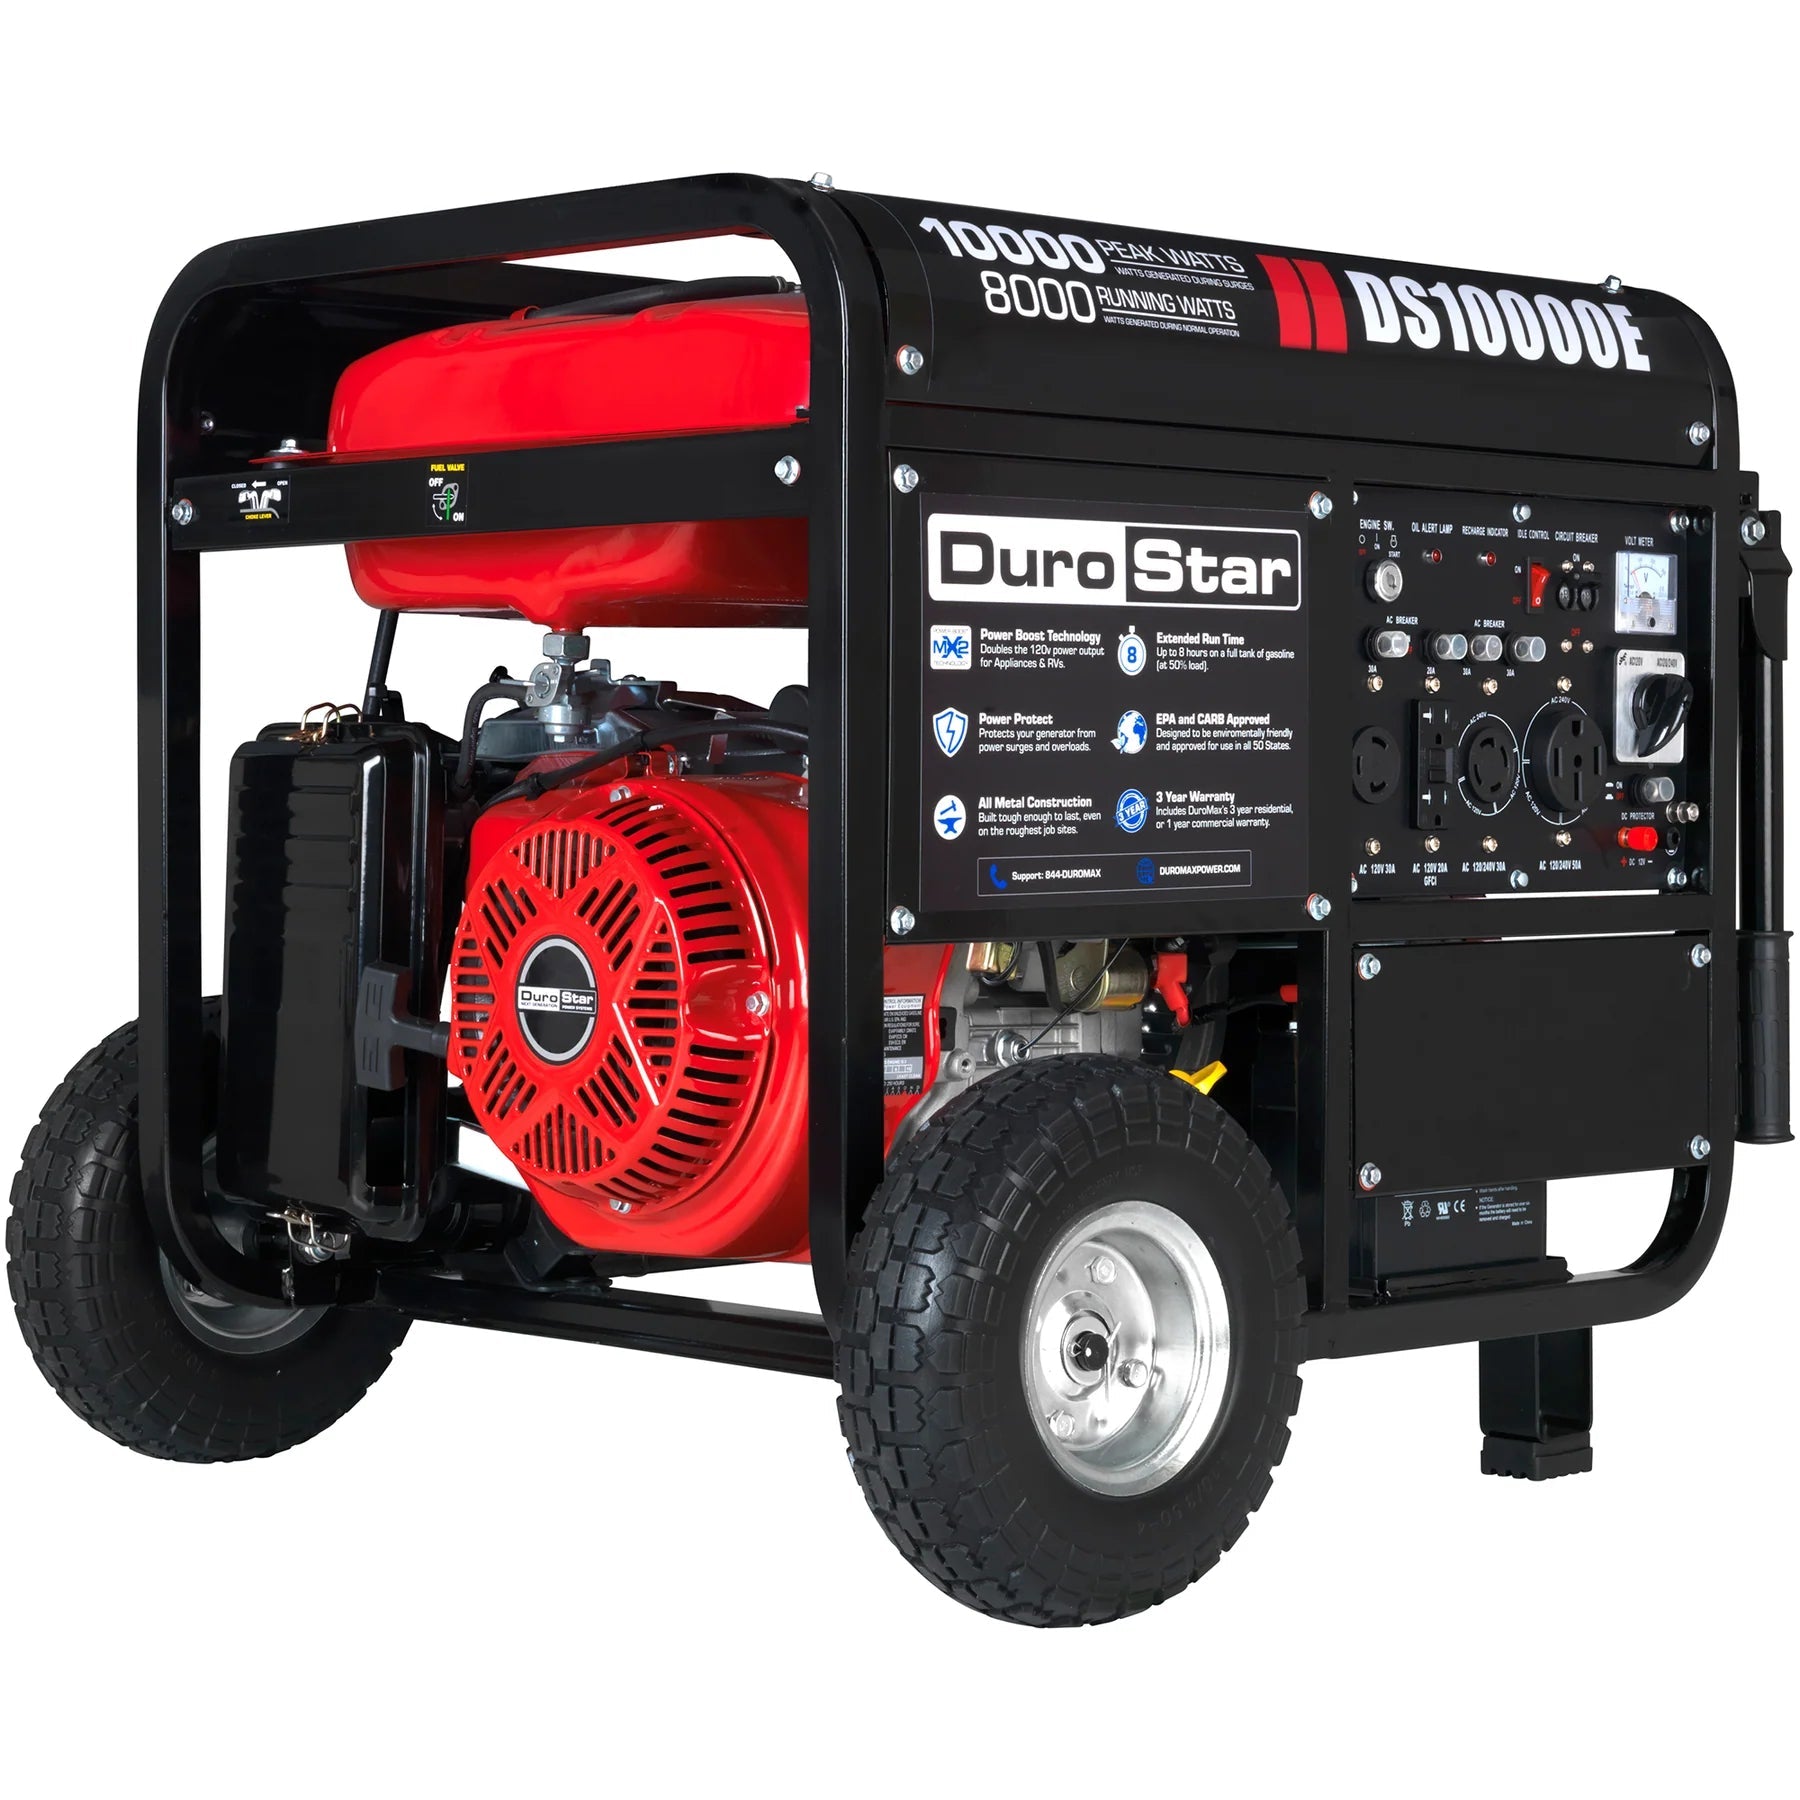 DuroStar 10,000 Watt Gasoline Portable Generator - Prime Yard Tools